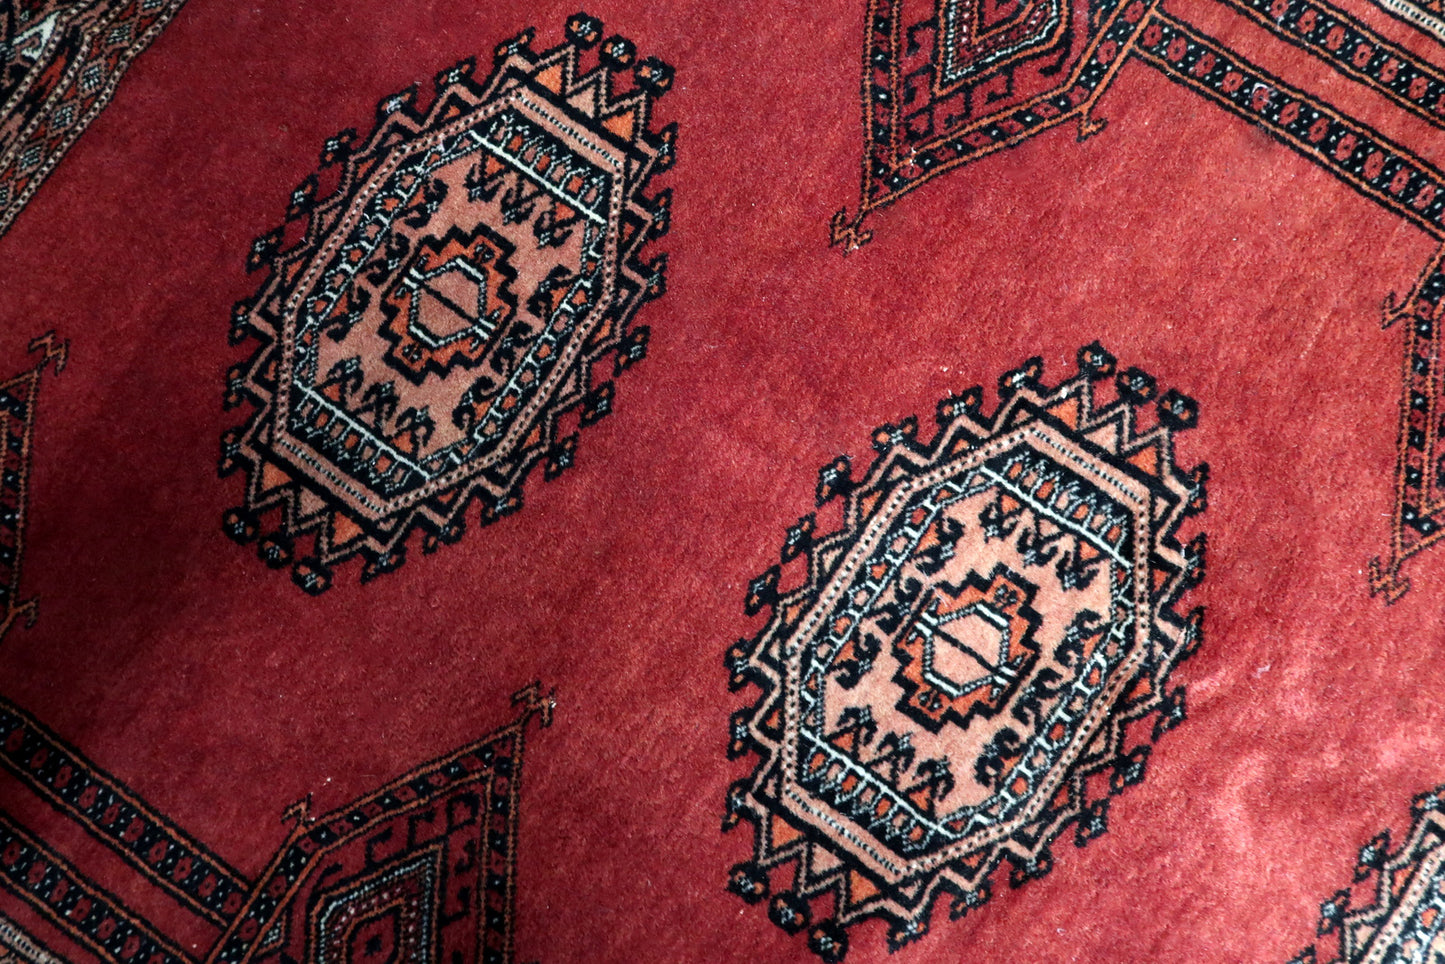 Texture and Colors of Handmade Uzbek Rug